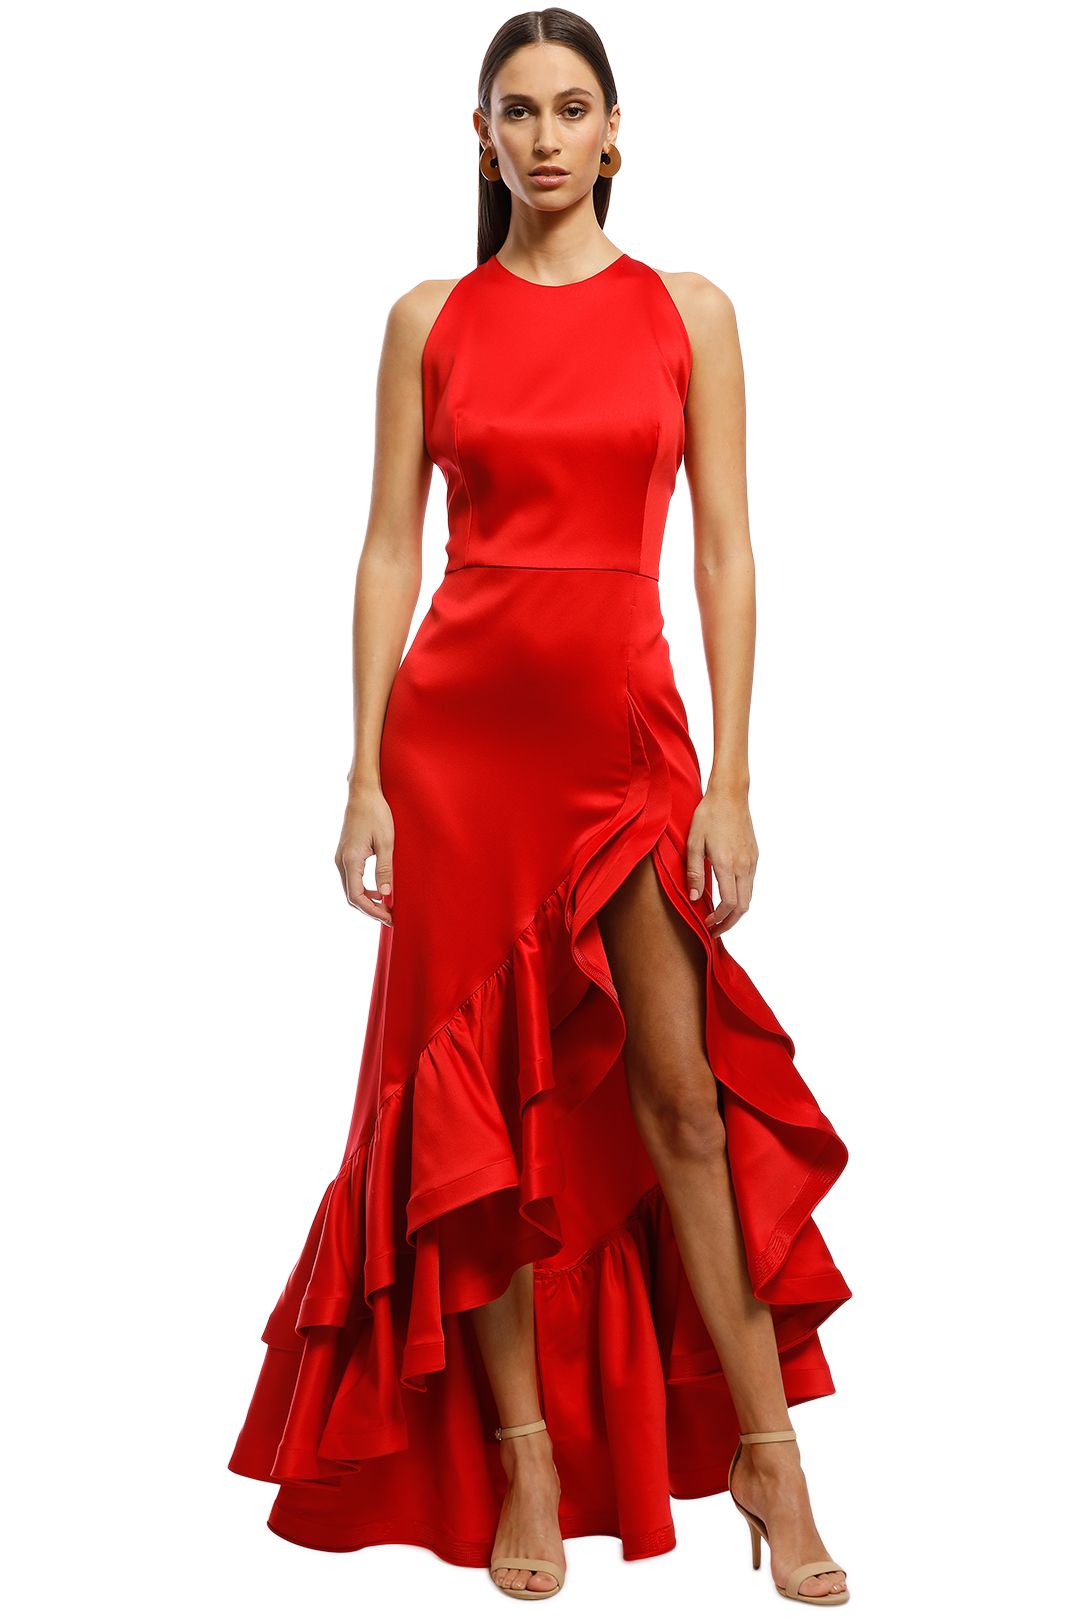 bronx and banco red dress